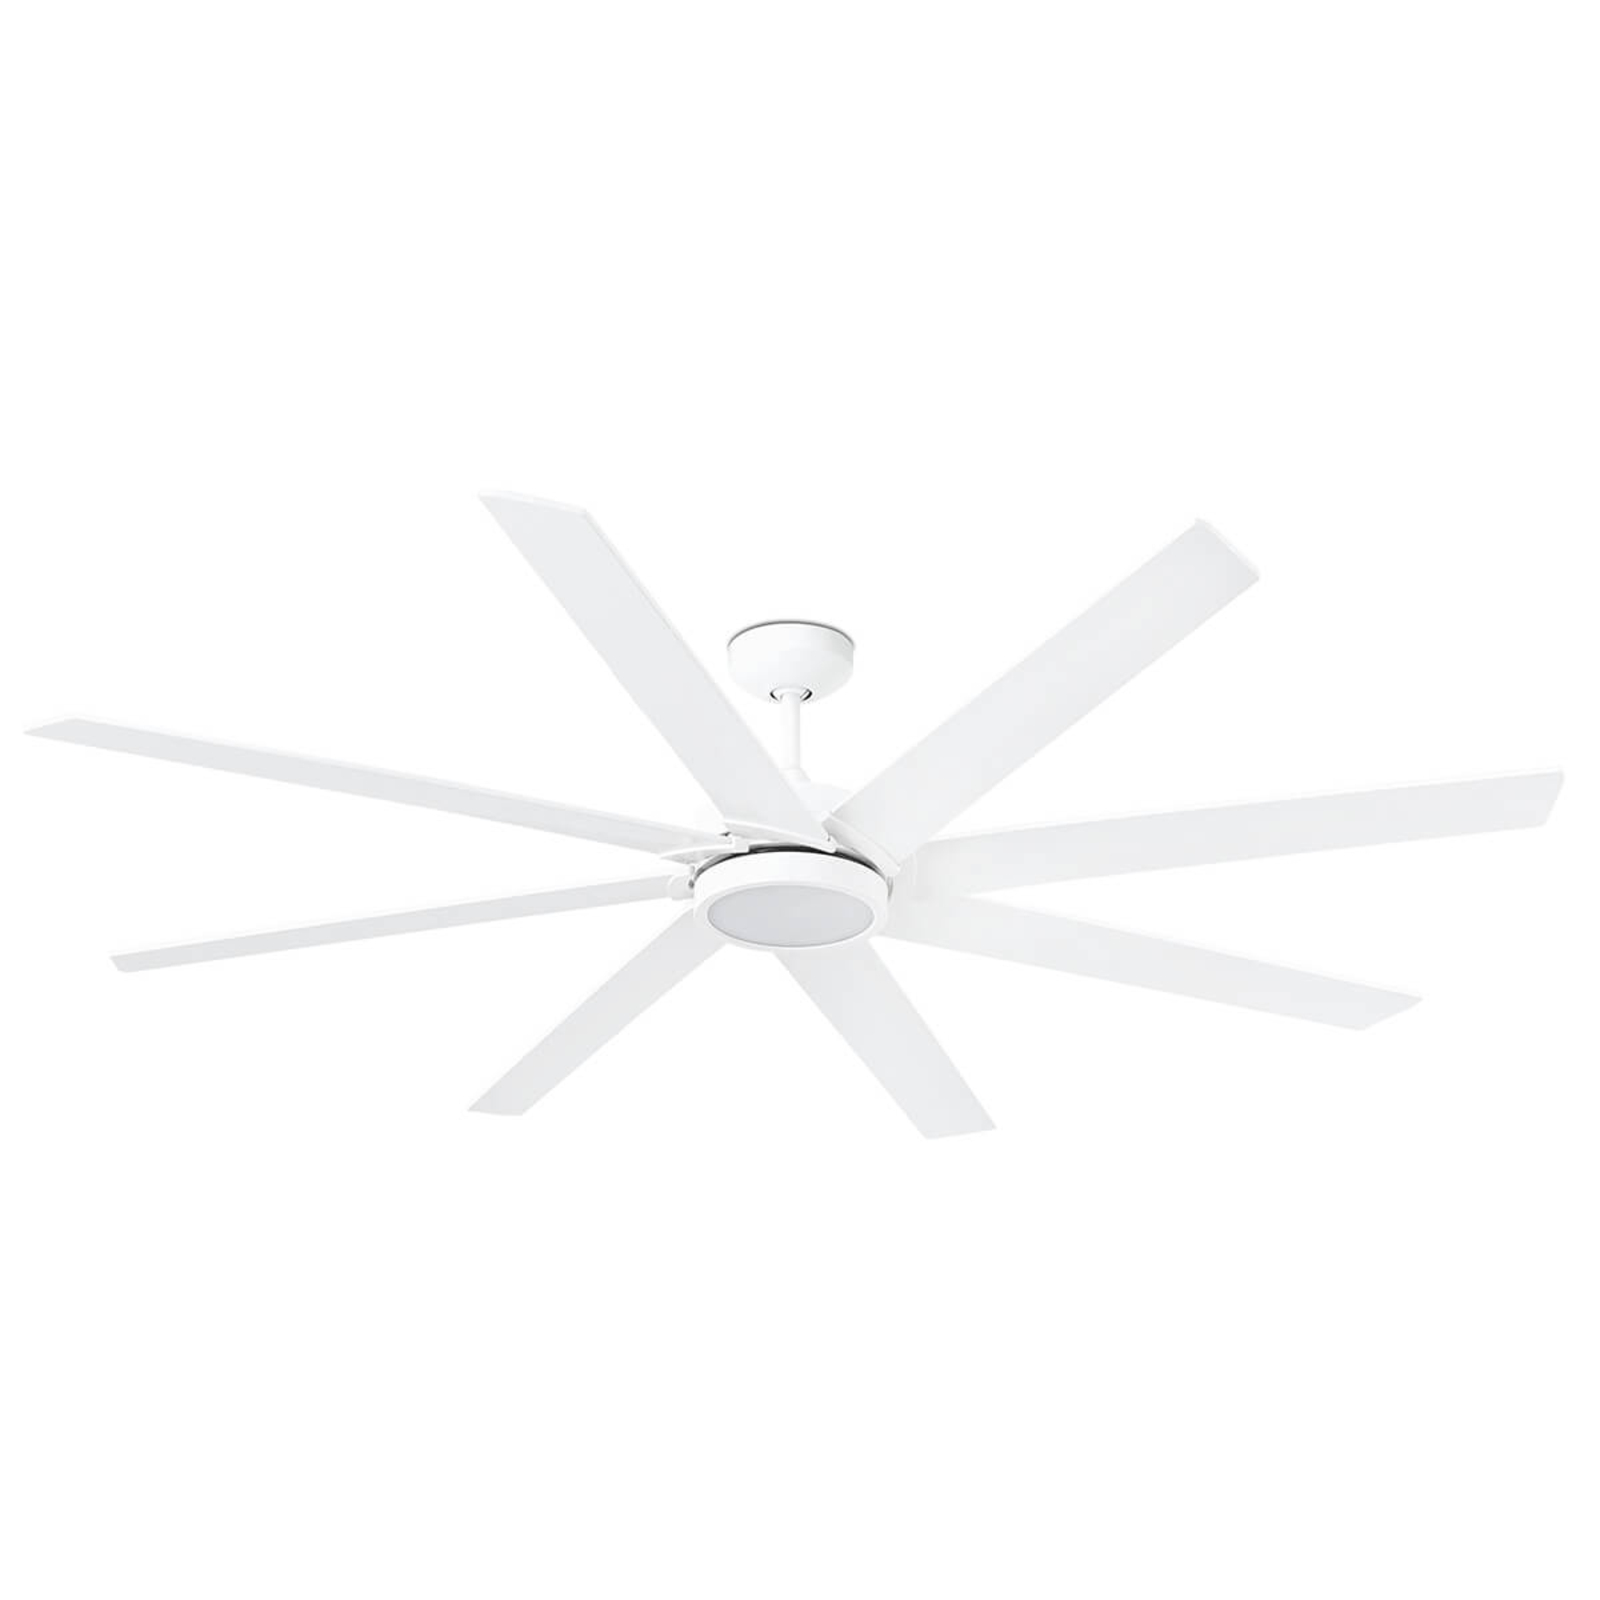 Eight-blade LED ceiling fan Century white